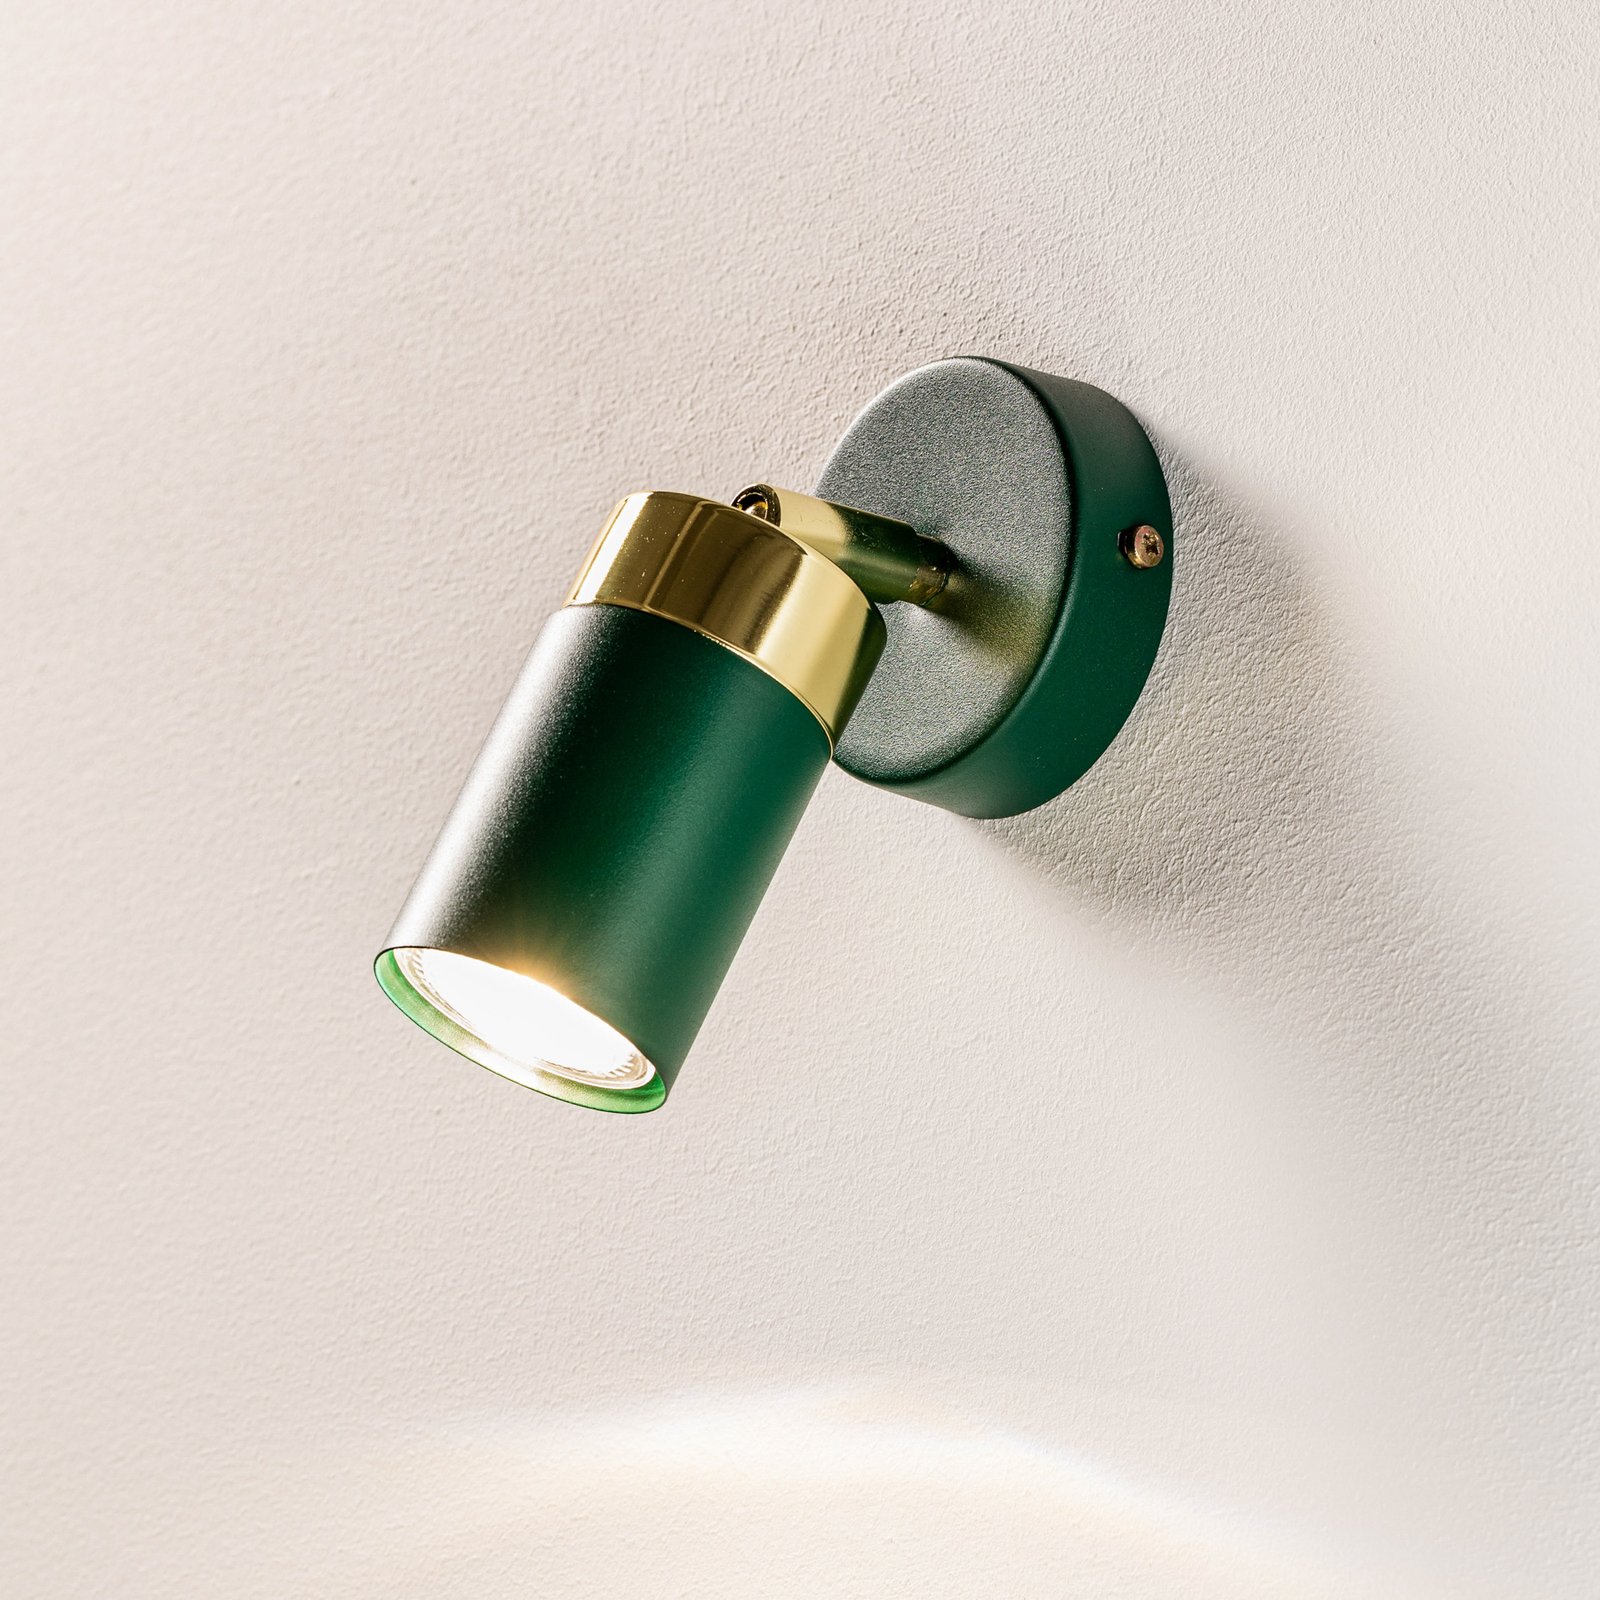 Joker wall spotlight, green/gold, one-bulb